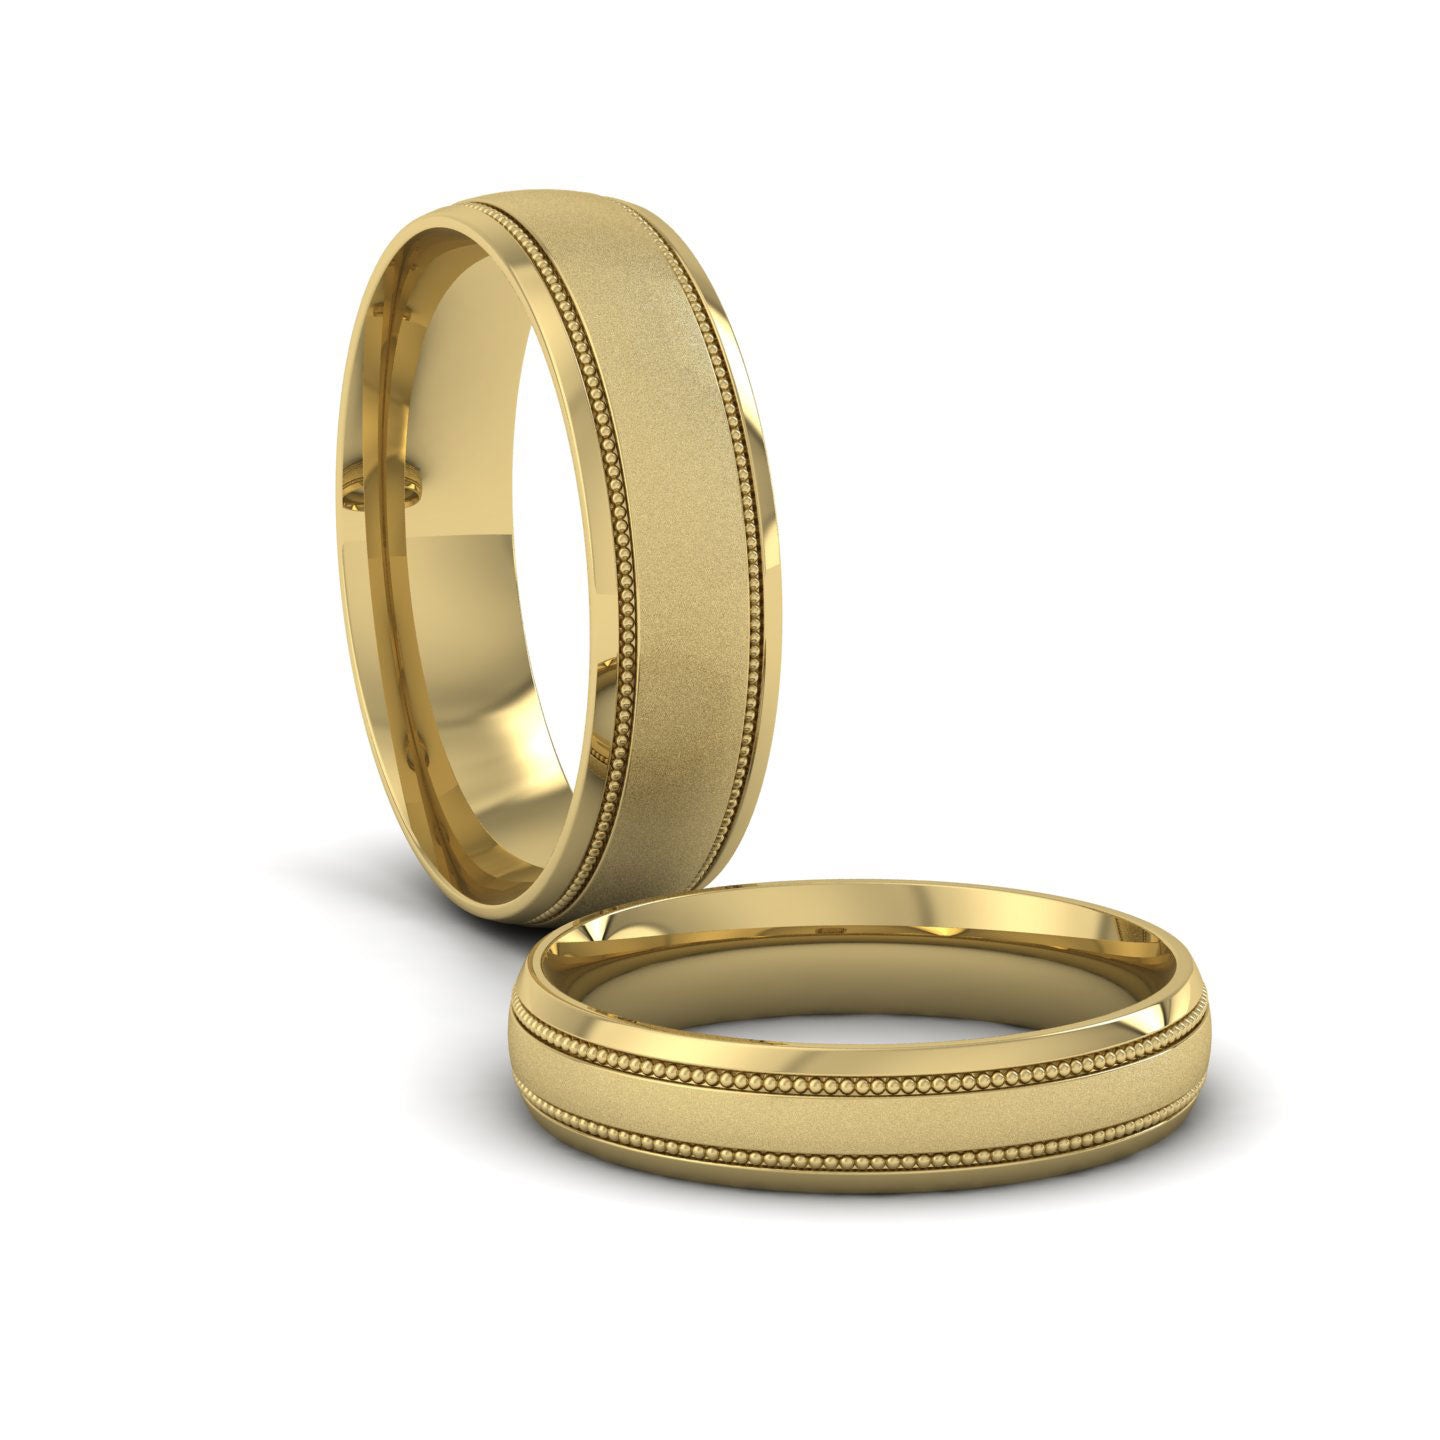 Millgrain And Contrasting Matt And Shiny Finish 9ct Yellow Gold 4mm Wedding Ring